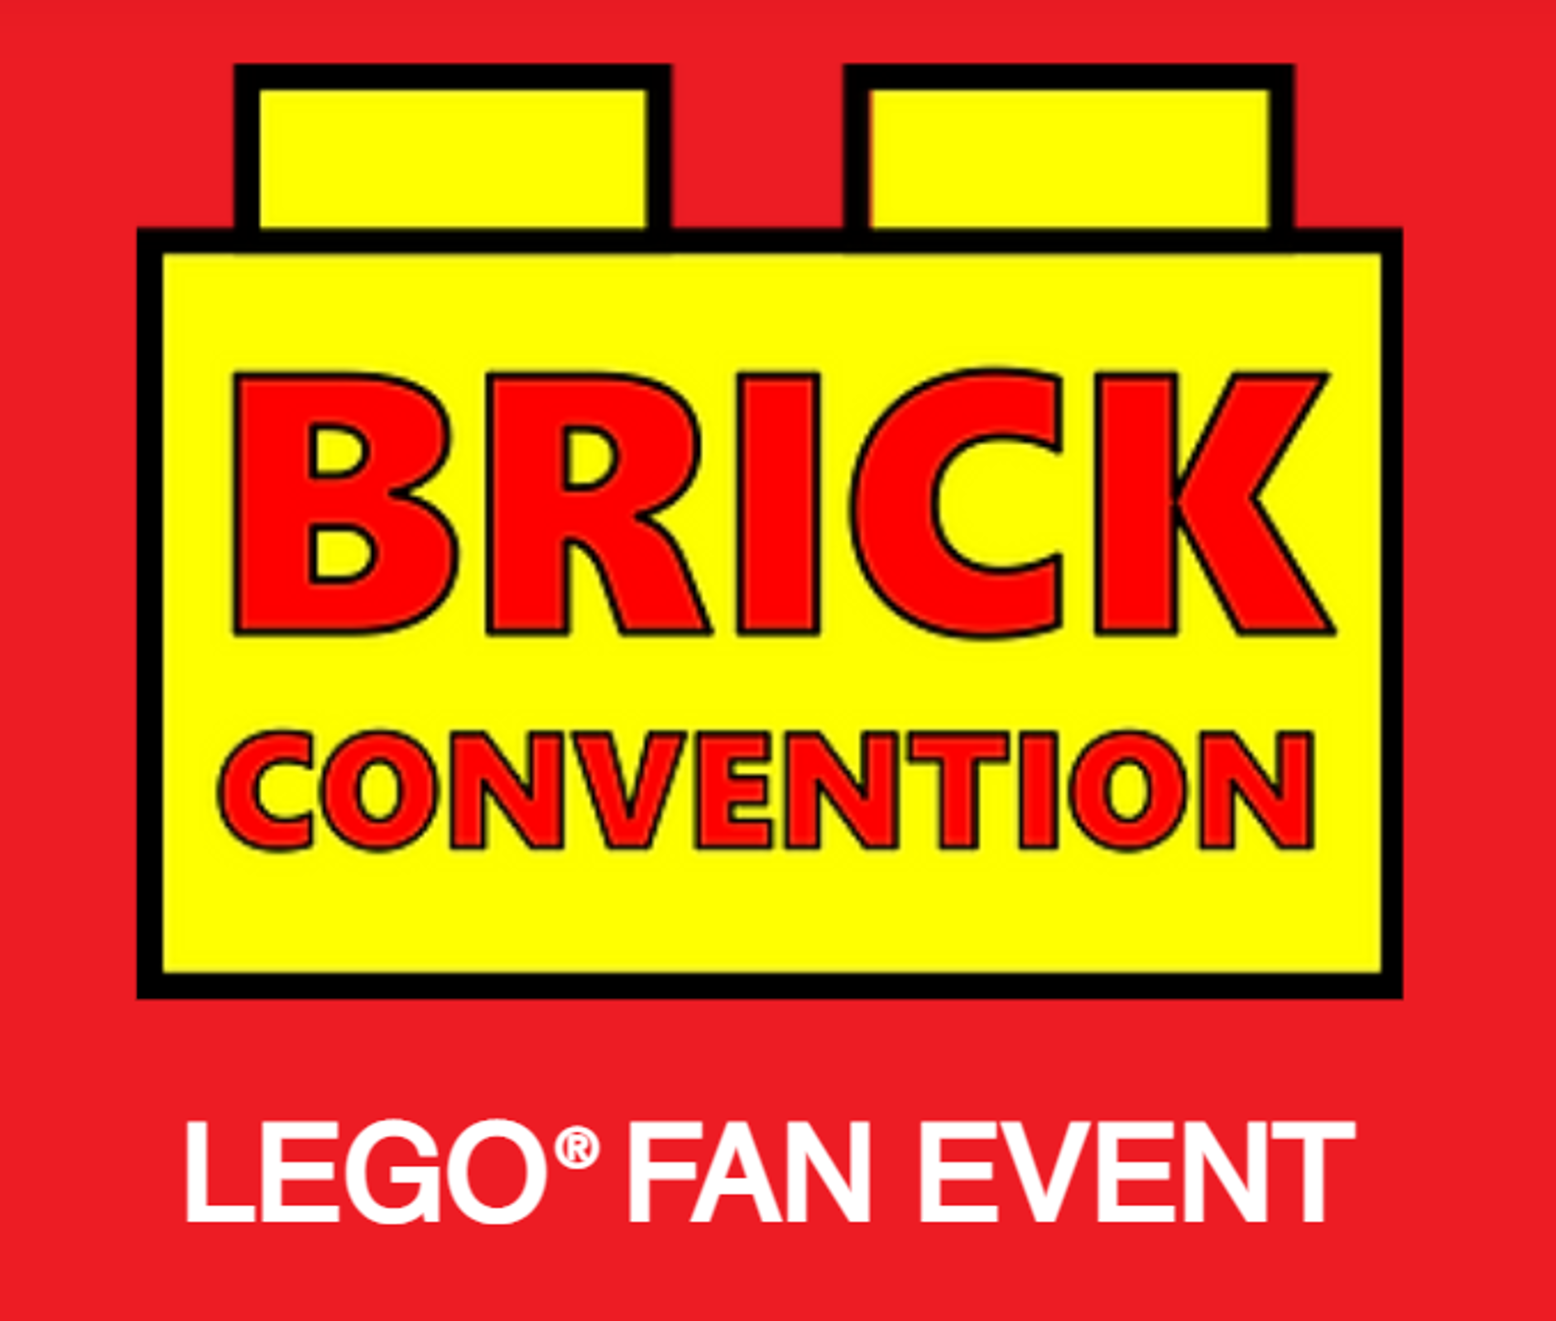 BRICK CONVENTION - LEGO Fan Event